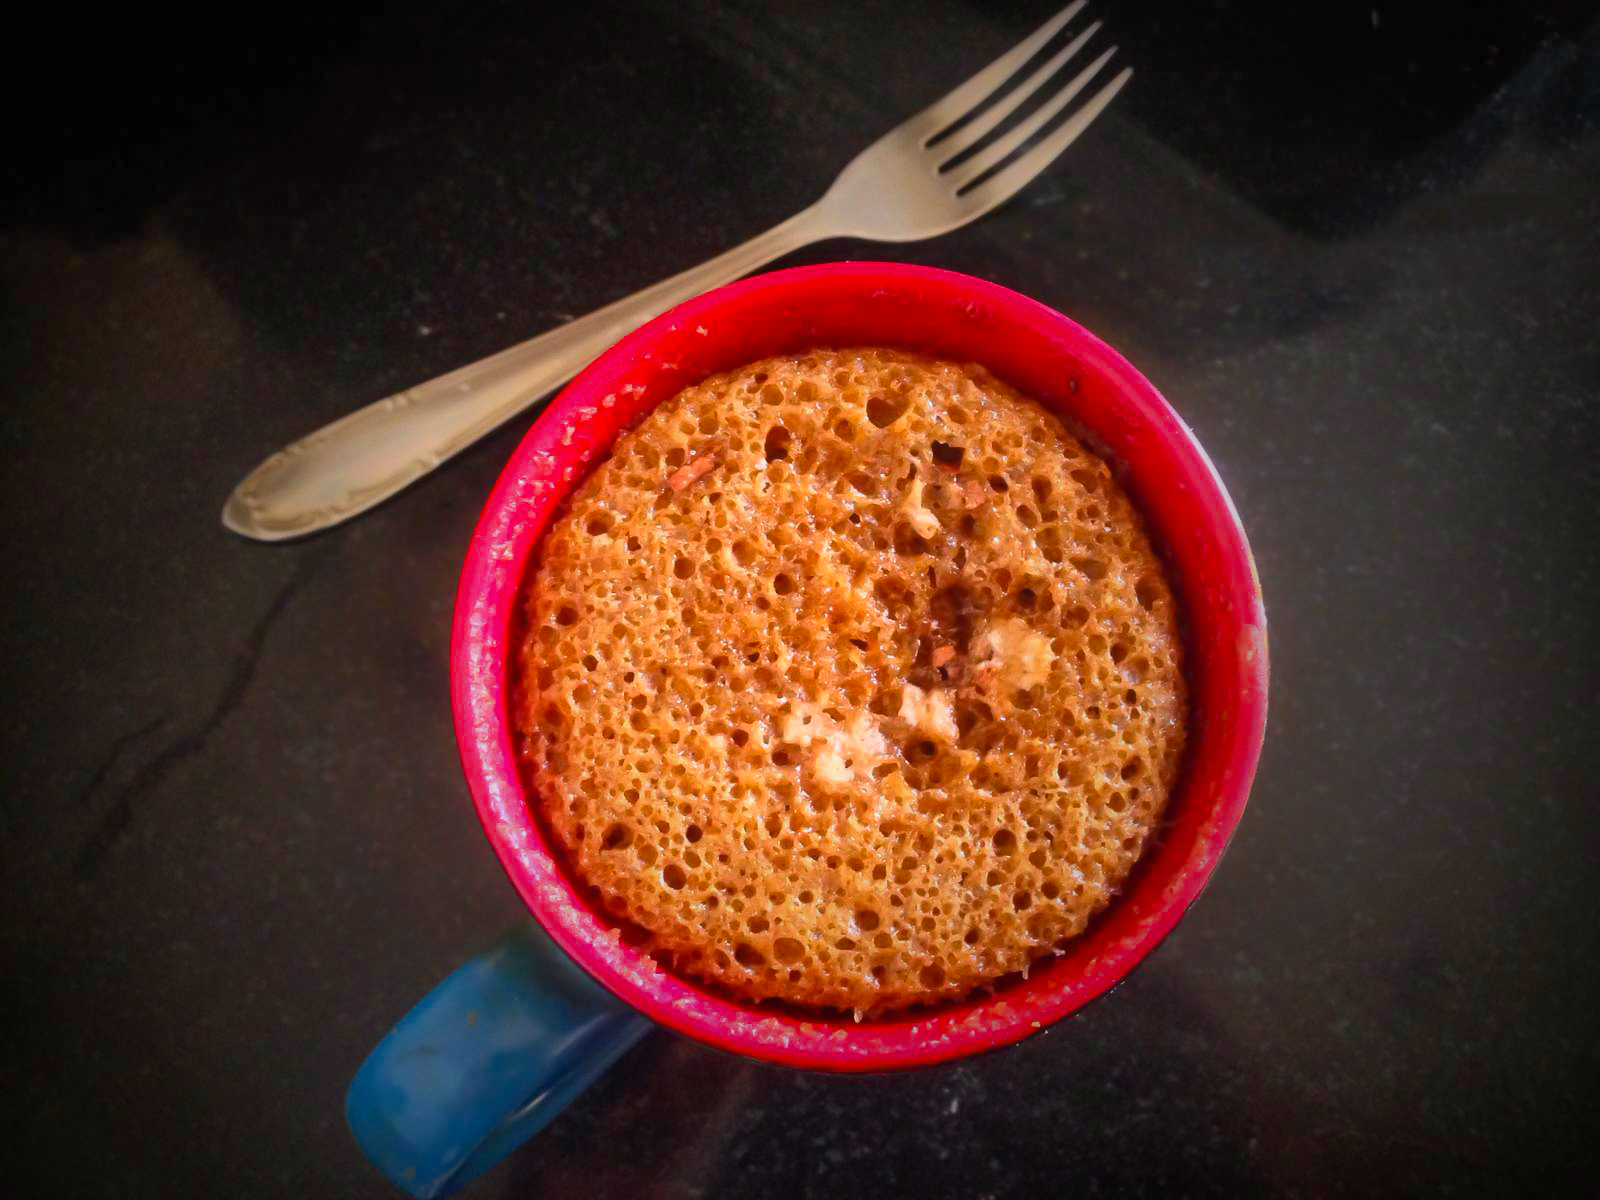 2 minutes-Eggless Microwave Chocolate Mug Cake